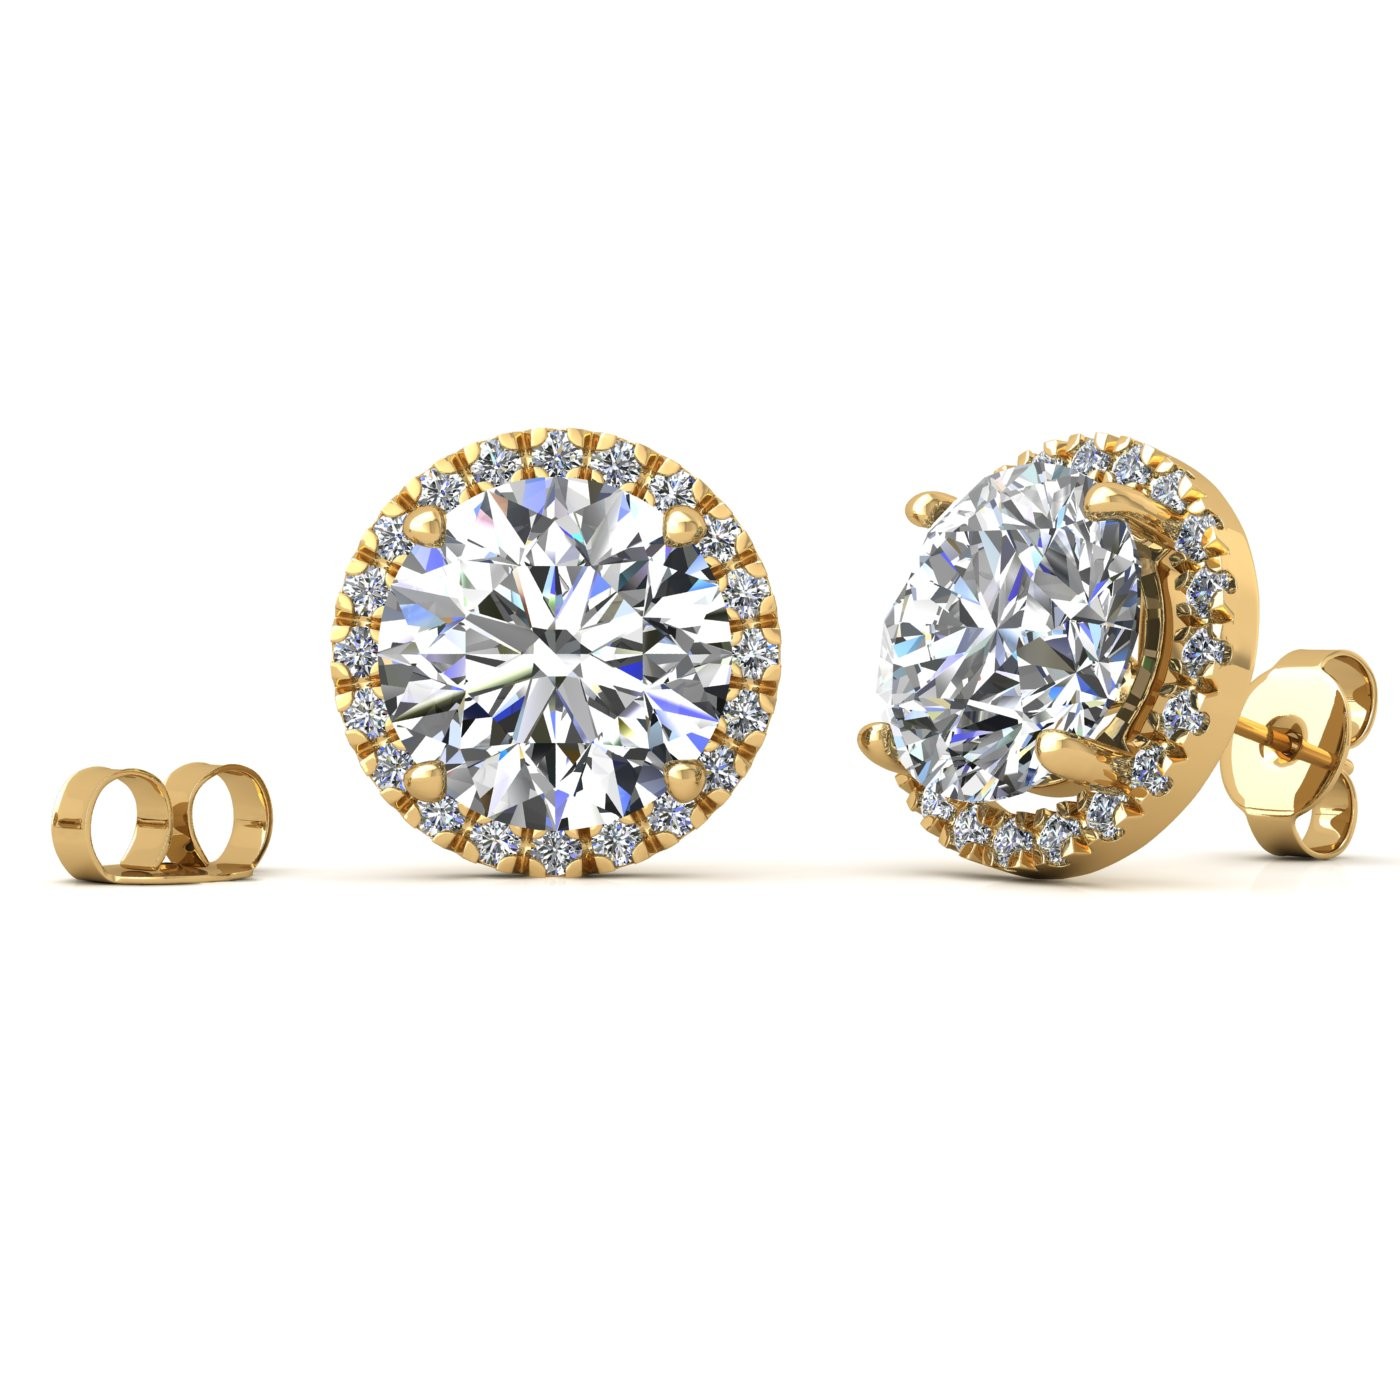 18k yellow gold  0,3 ct each (0,6 tcw) 4 prongs round shape diamond earrings with diamond pavÉ set halo Photos & images